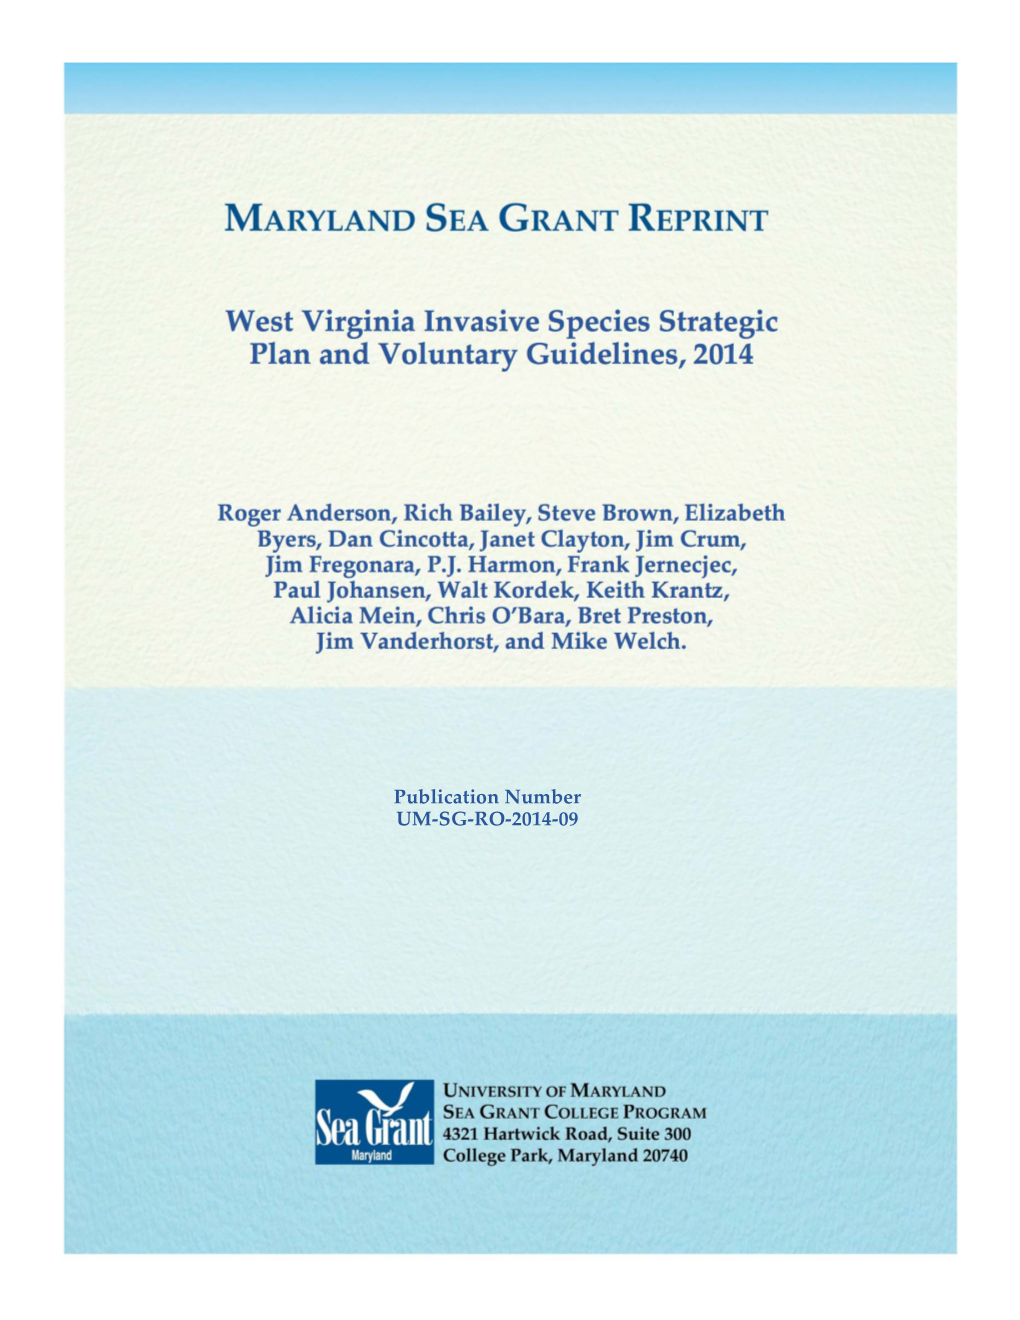 West Virginia Invasive Species Strategic Plan and Voluntary Guidelines, 2014